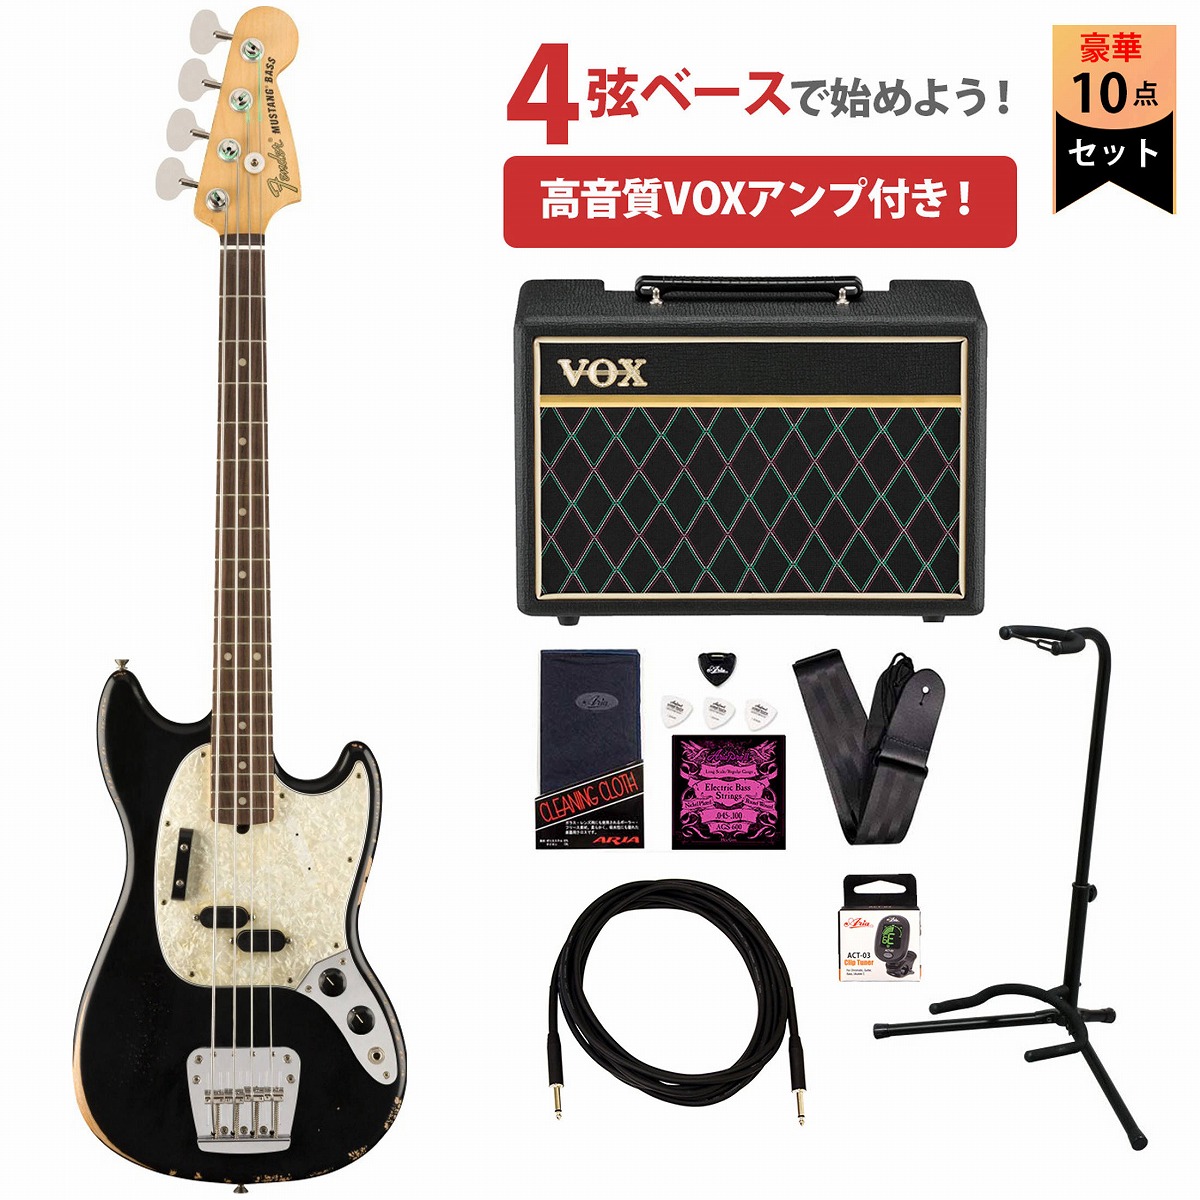 Fender / JMJ Road Worn Mustang Bass BlackVOXアンプ付属エレキベース